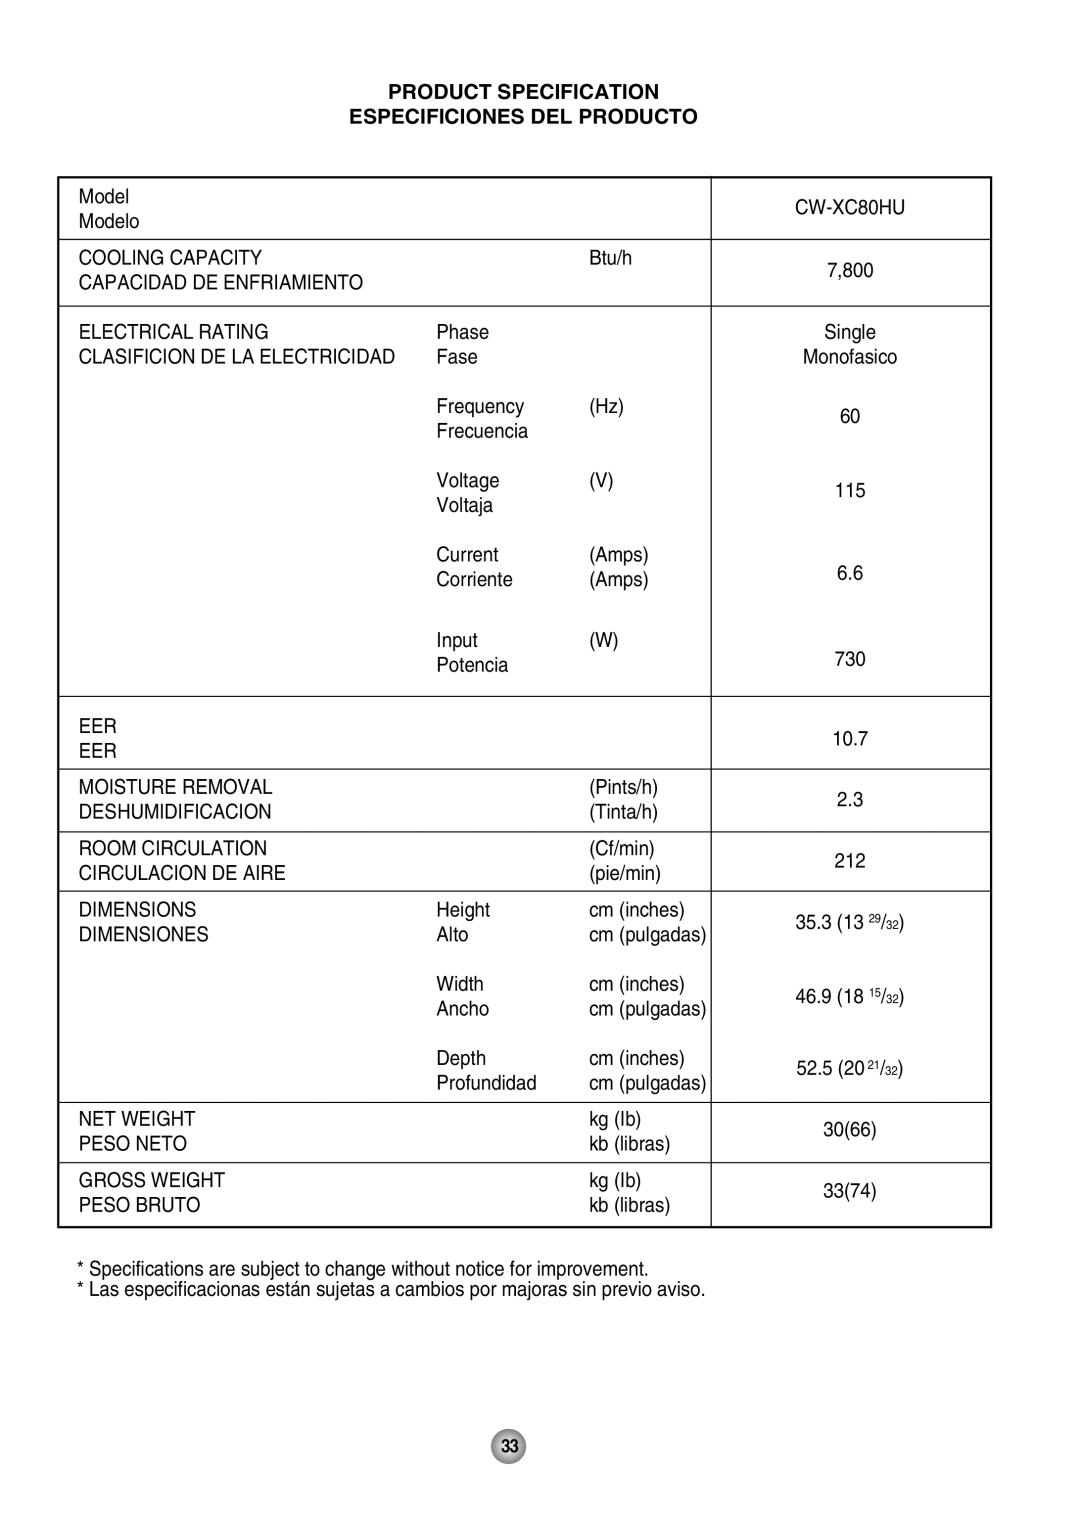 Panasonic CW-XC80HU manual Product Specification, Especificiones Del Producto, 29/32, 15/32, 21/32 